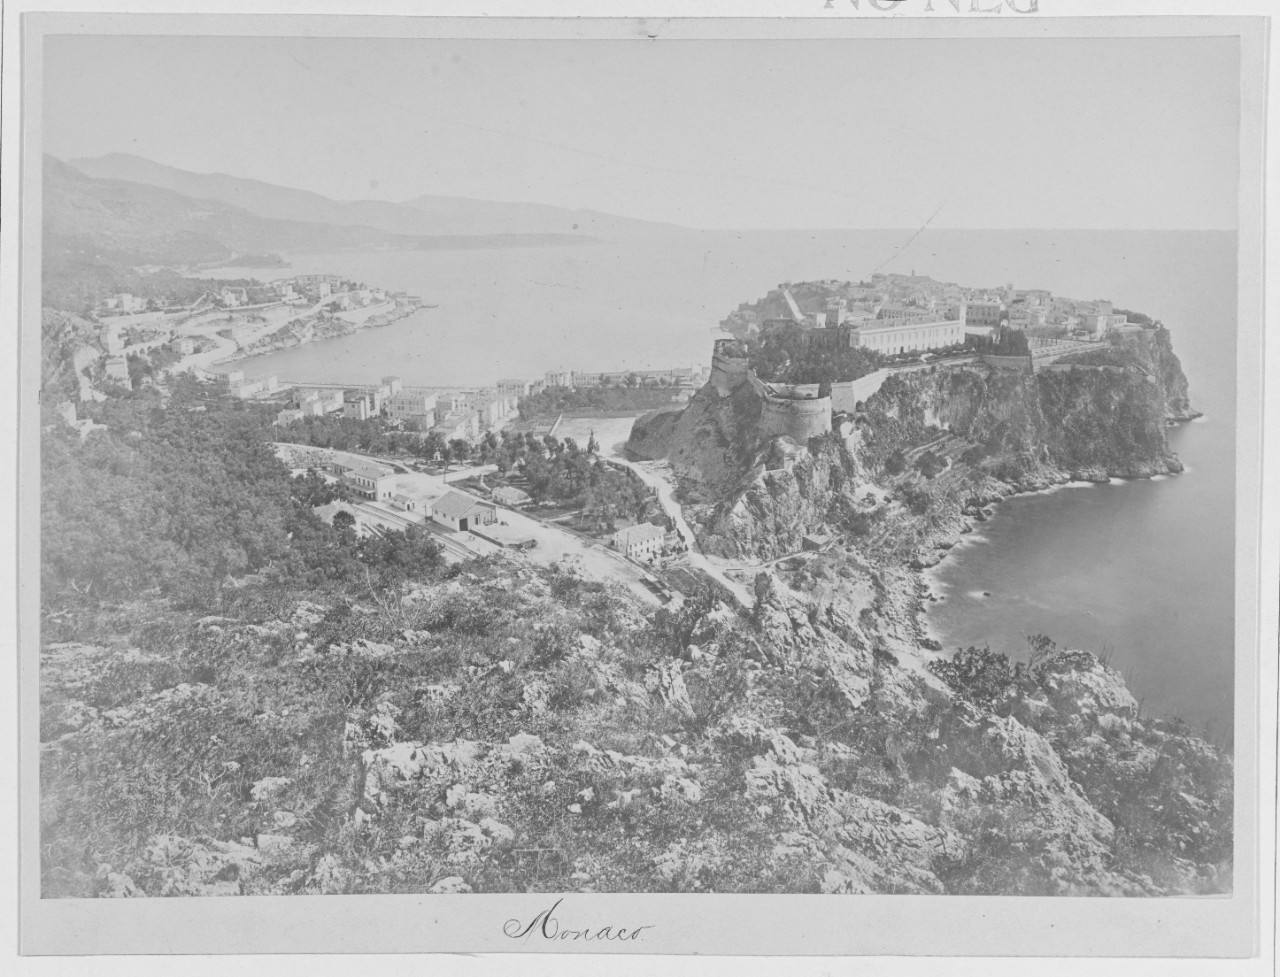 Monace, 1885